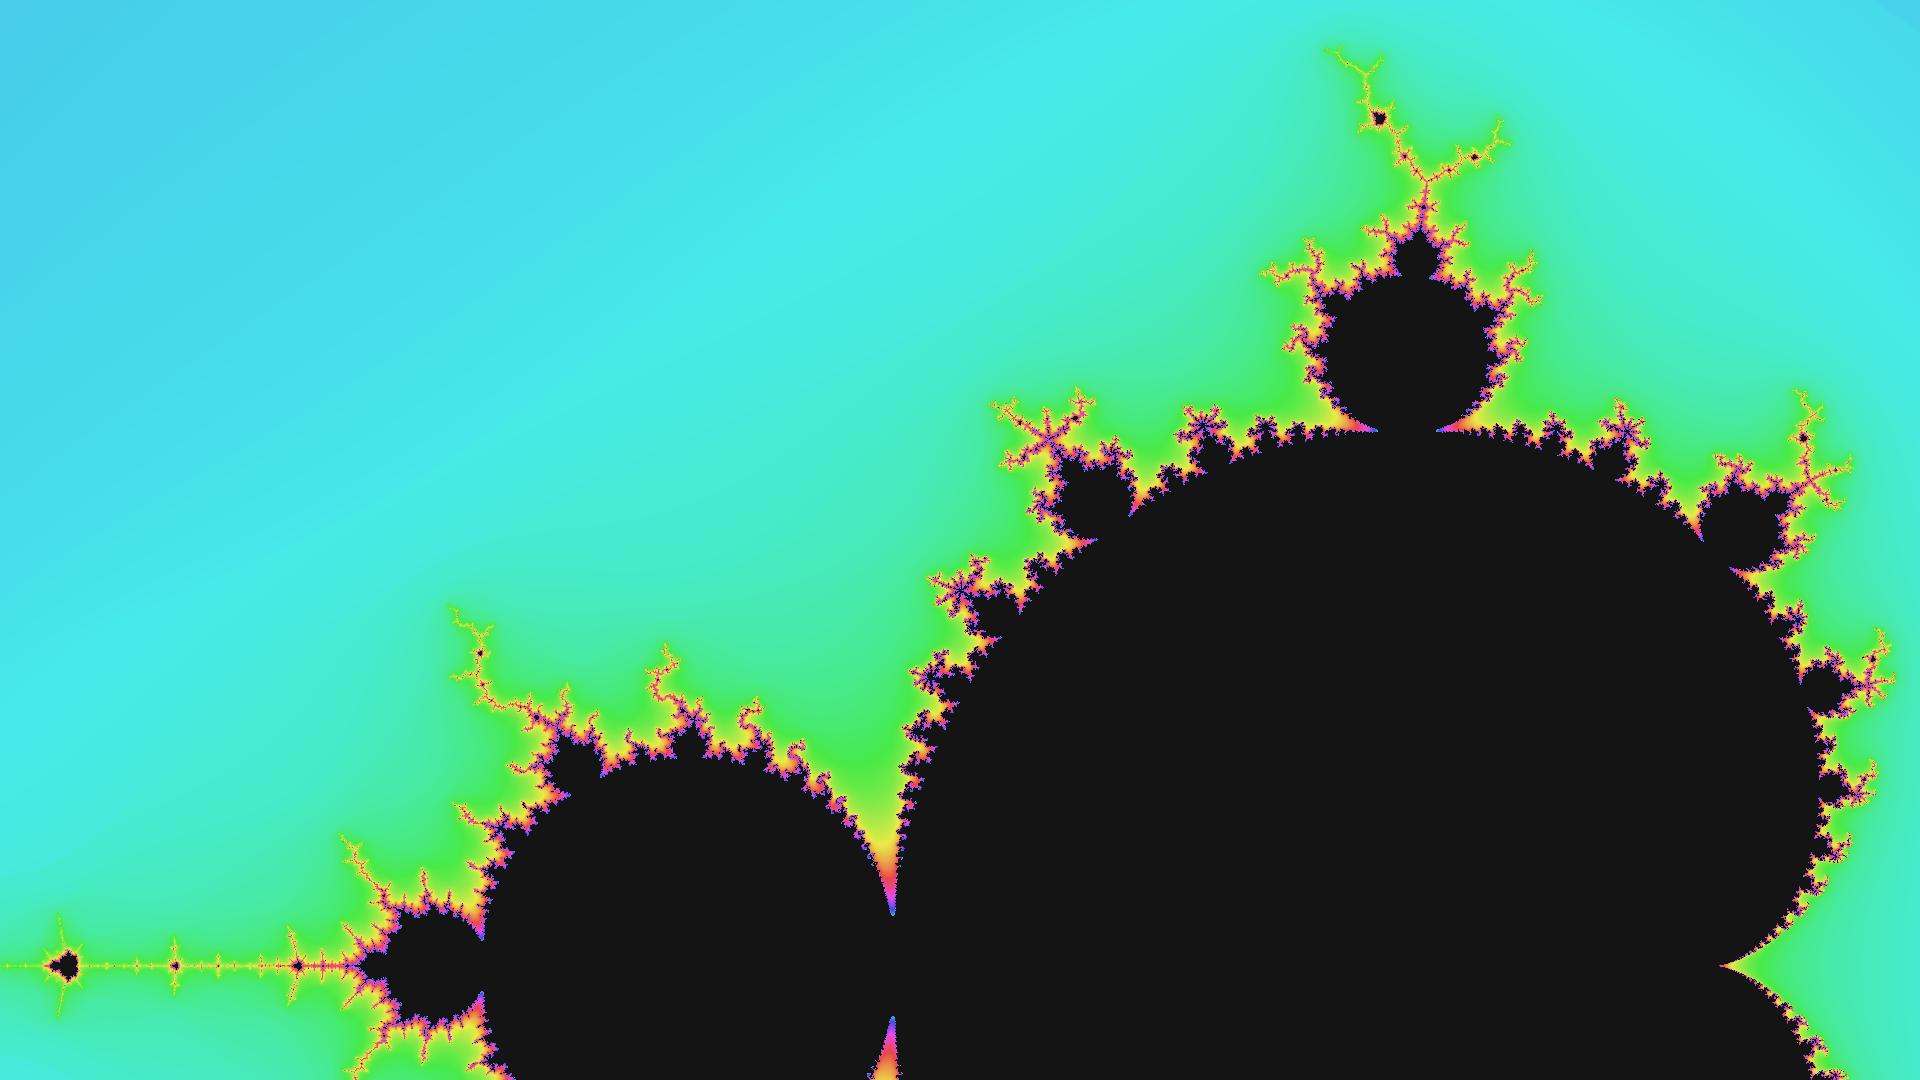 A render generated by bmp.ink of the Mandelbrot fractal set